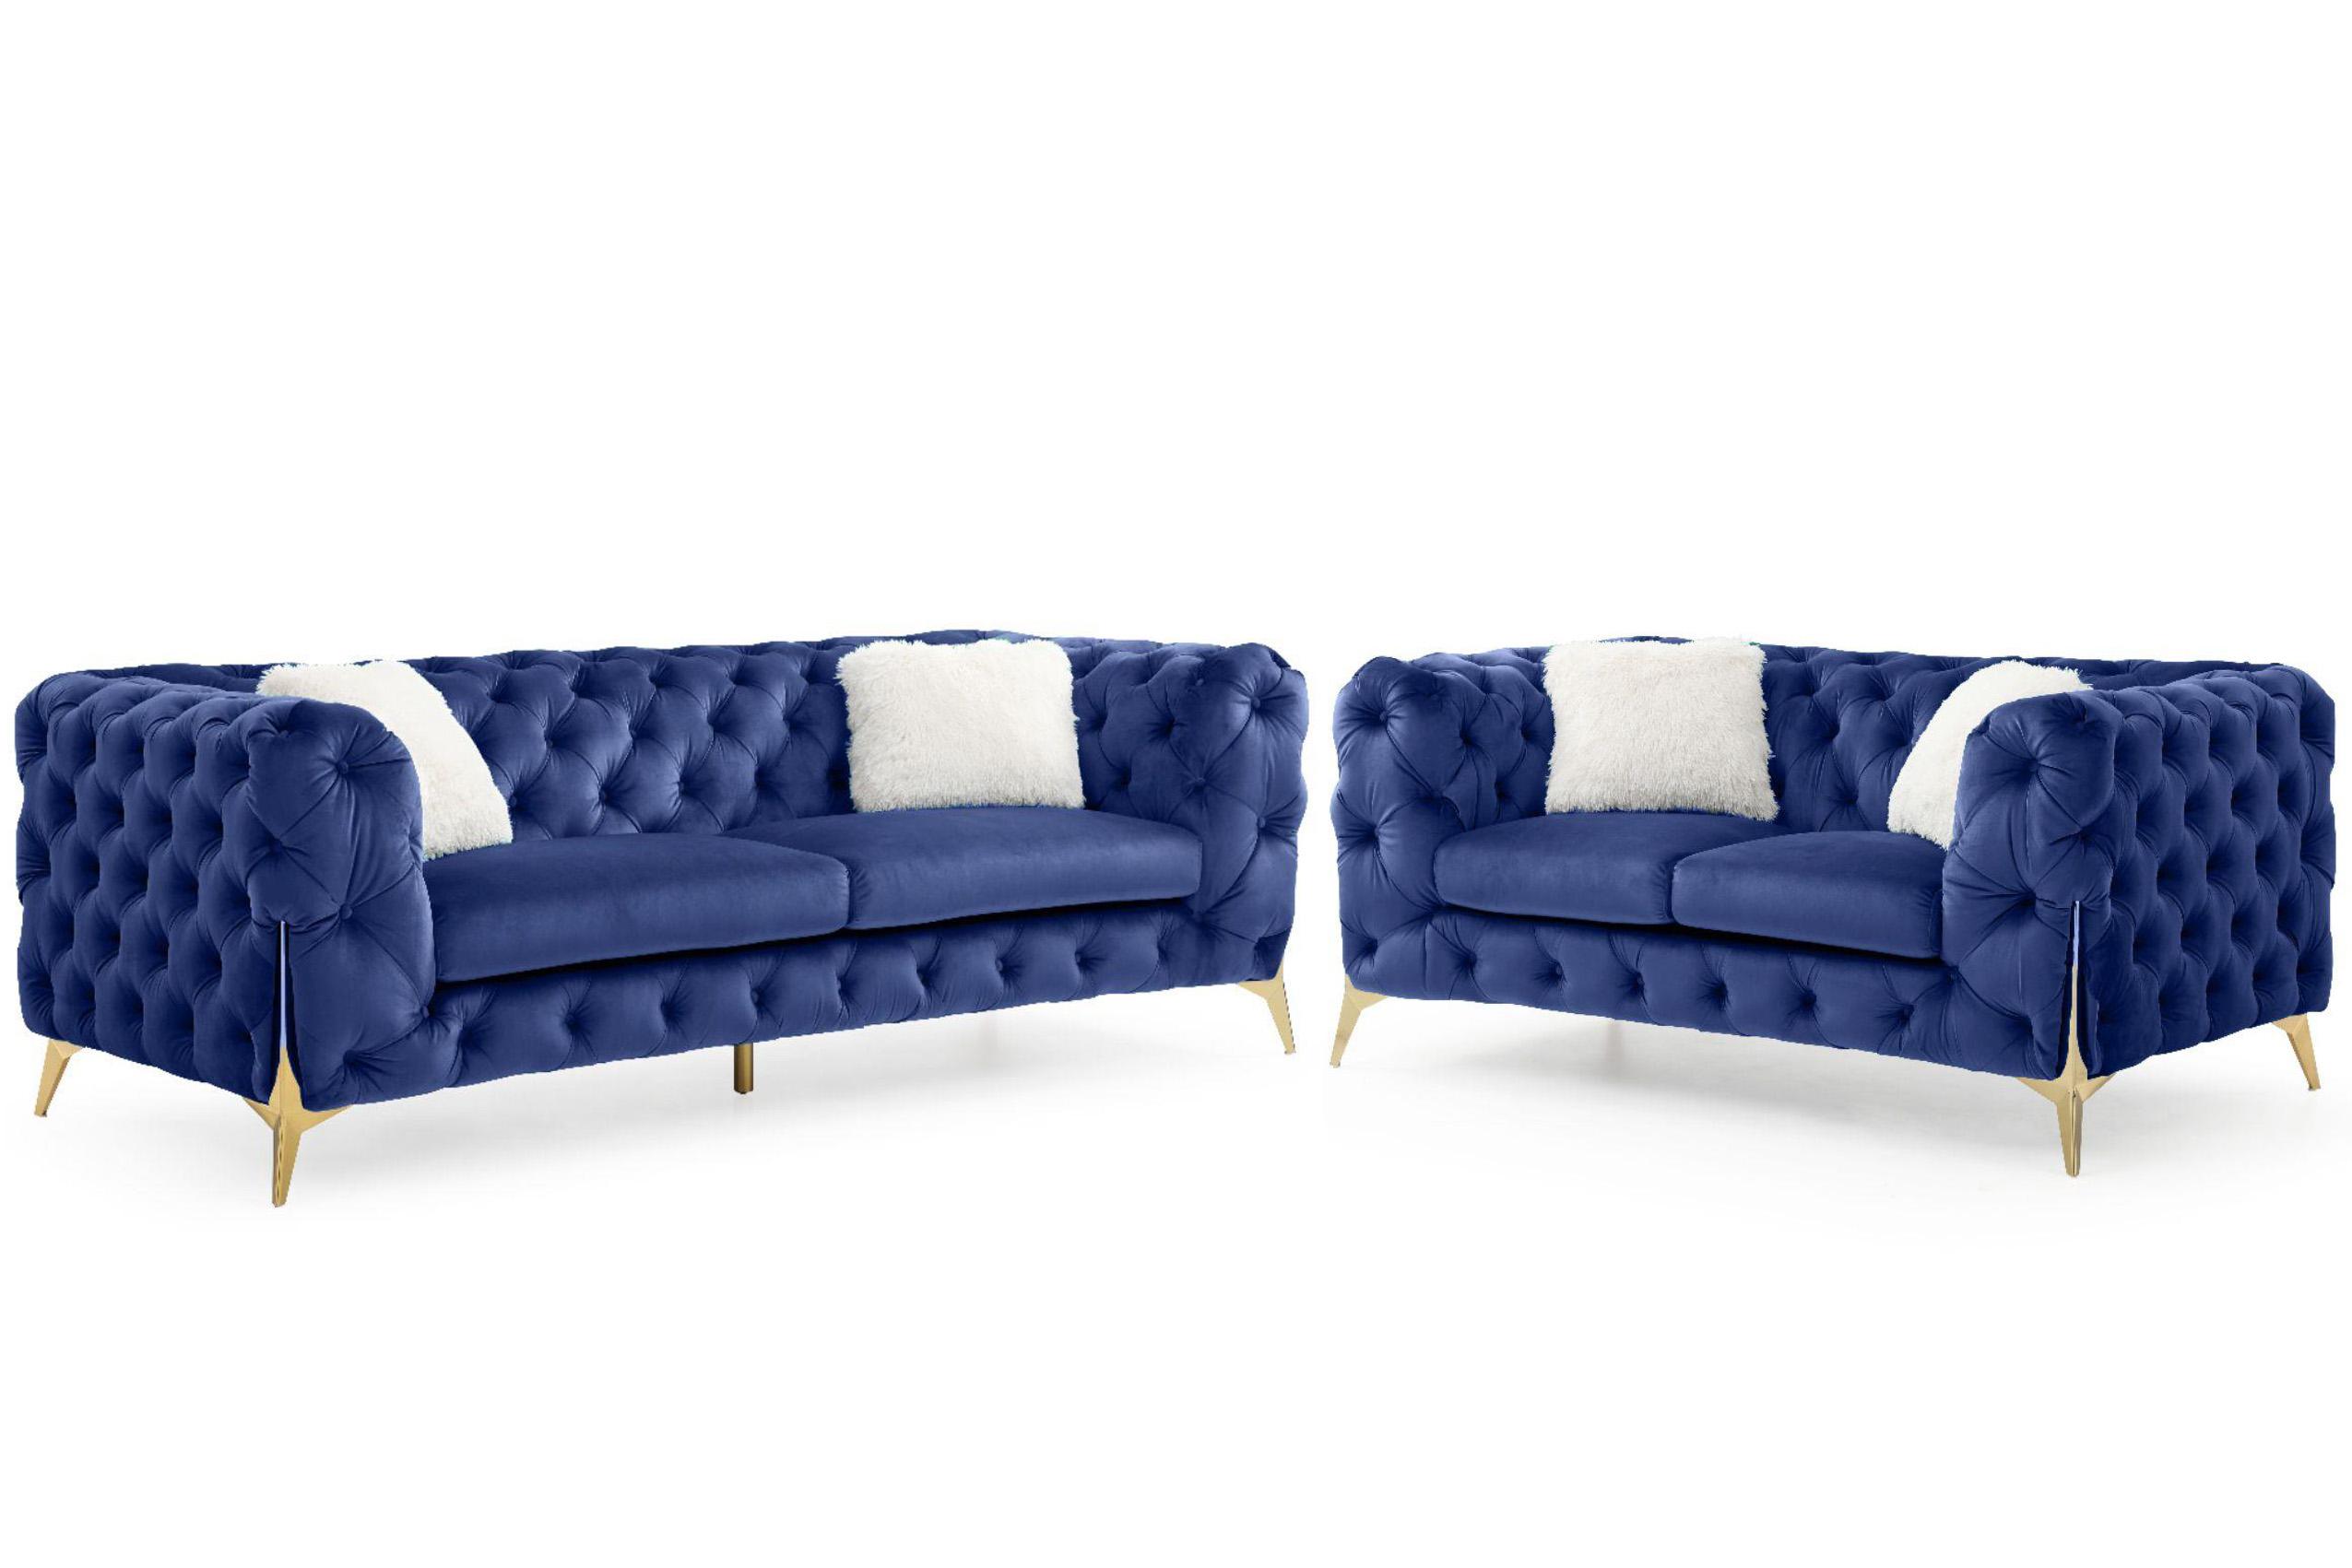 Contemporary, Modern Sofa Set MODERNO NAVY MODERNO-Navy-S-L in Navy Fabric